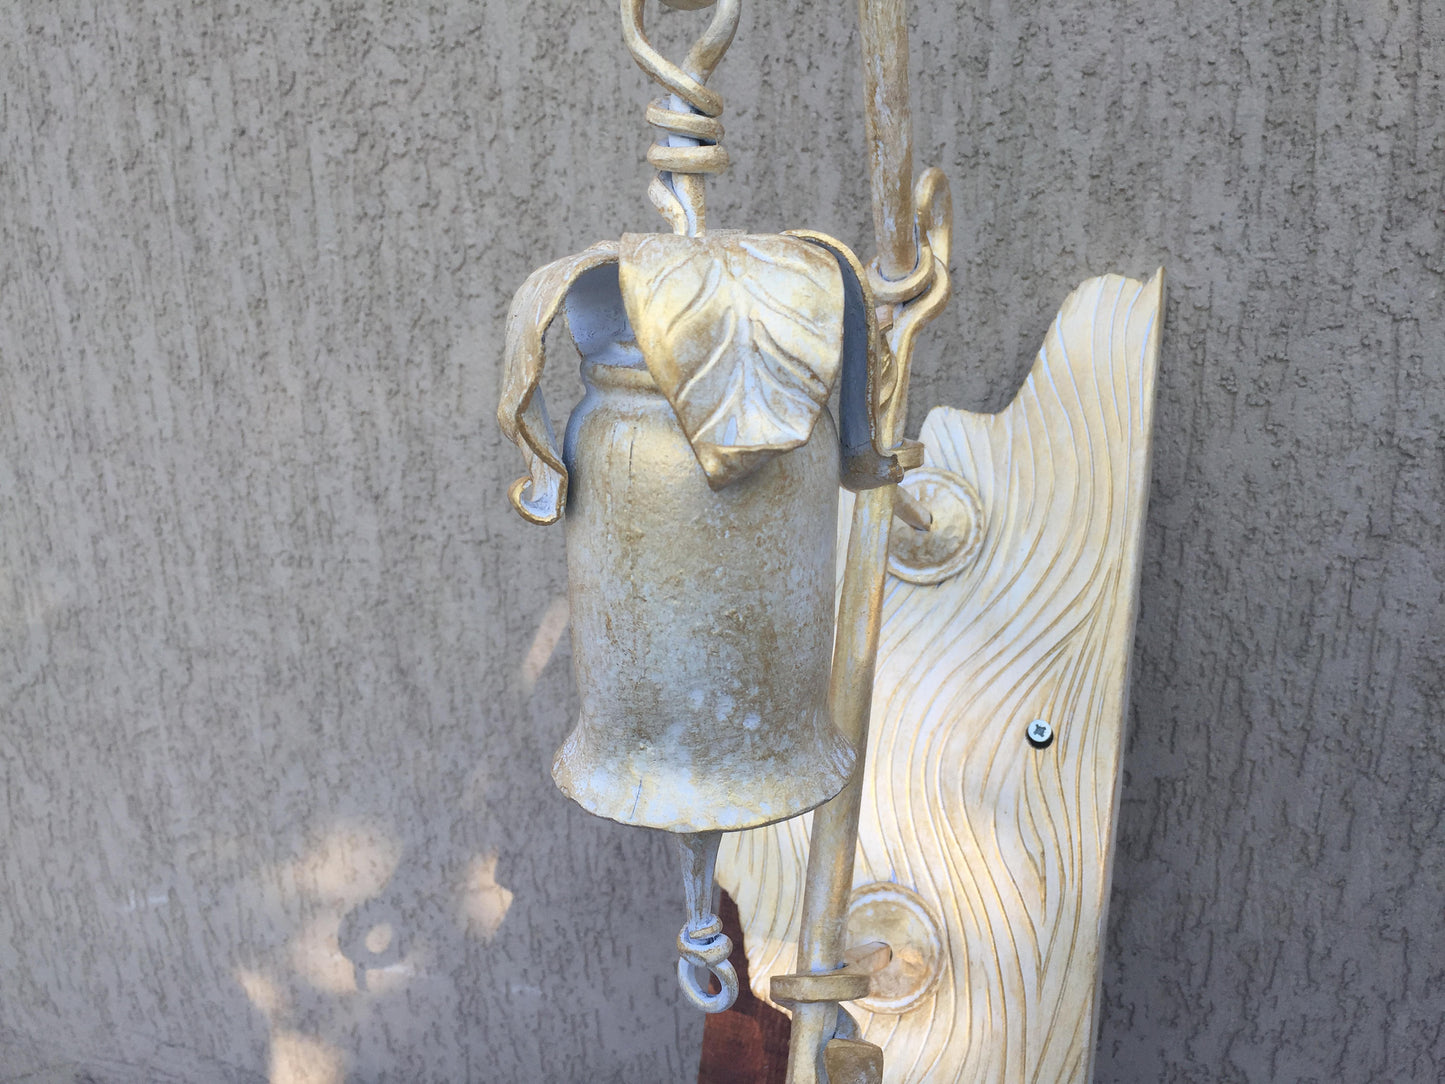 Bell, Christmas bell, metal sculpture, steampunk, Christmas gifts, porch decor, iron gift, Christmas gift for her, New Year gift, door bell